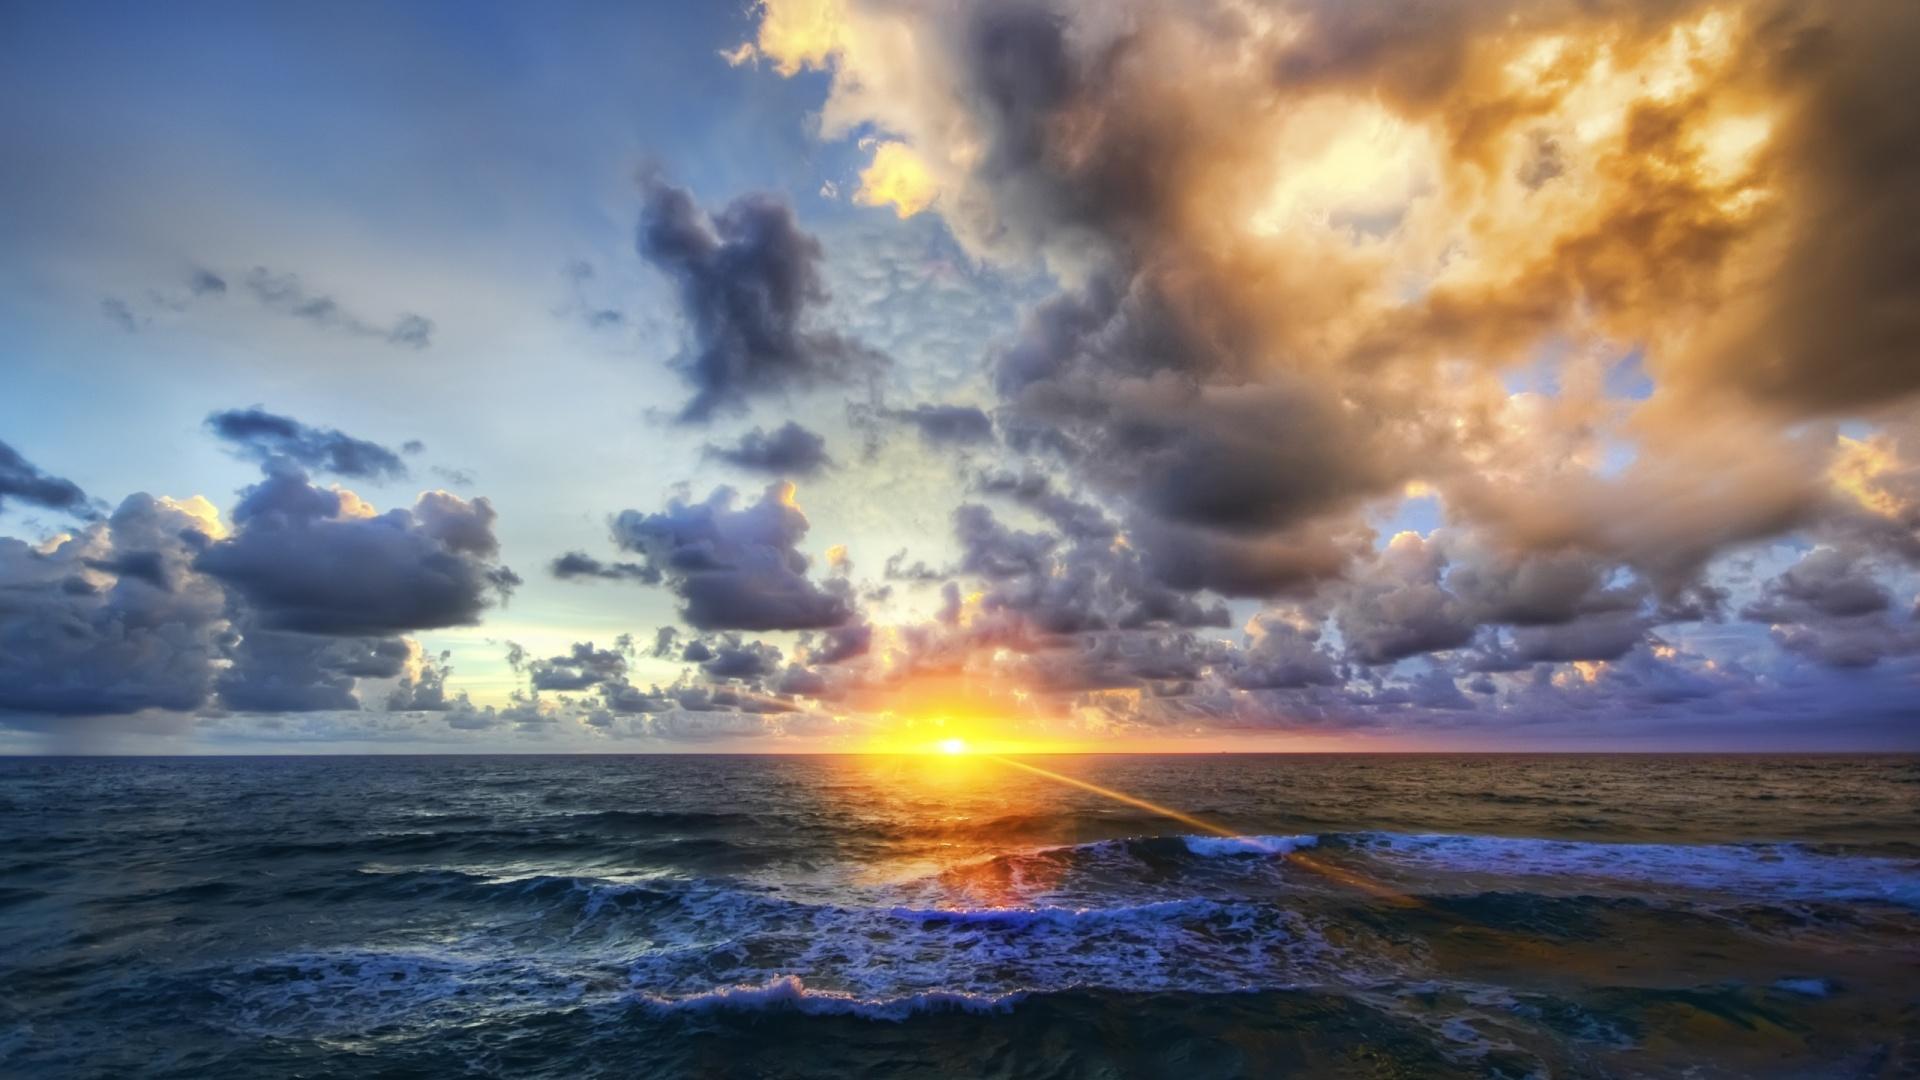 Beautiful Ocean Sunset Wallpaper 1920x1080 px Free Download